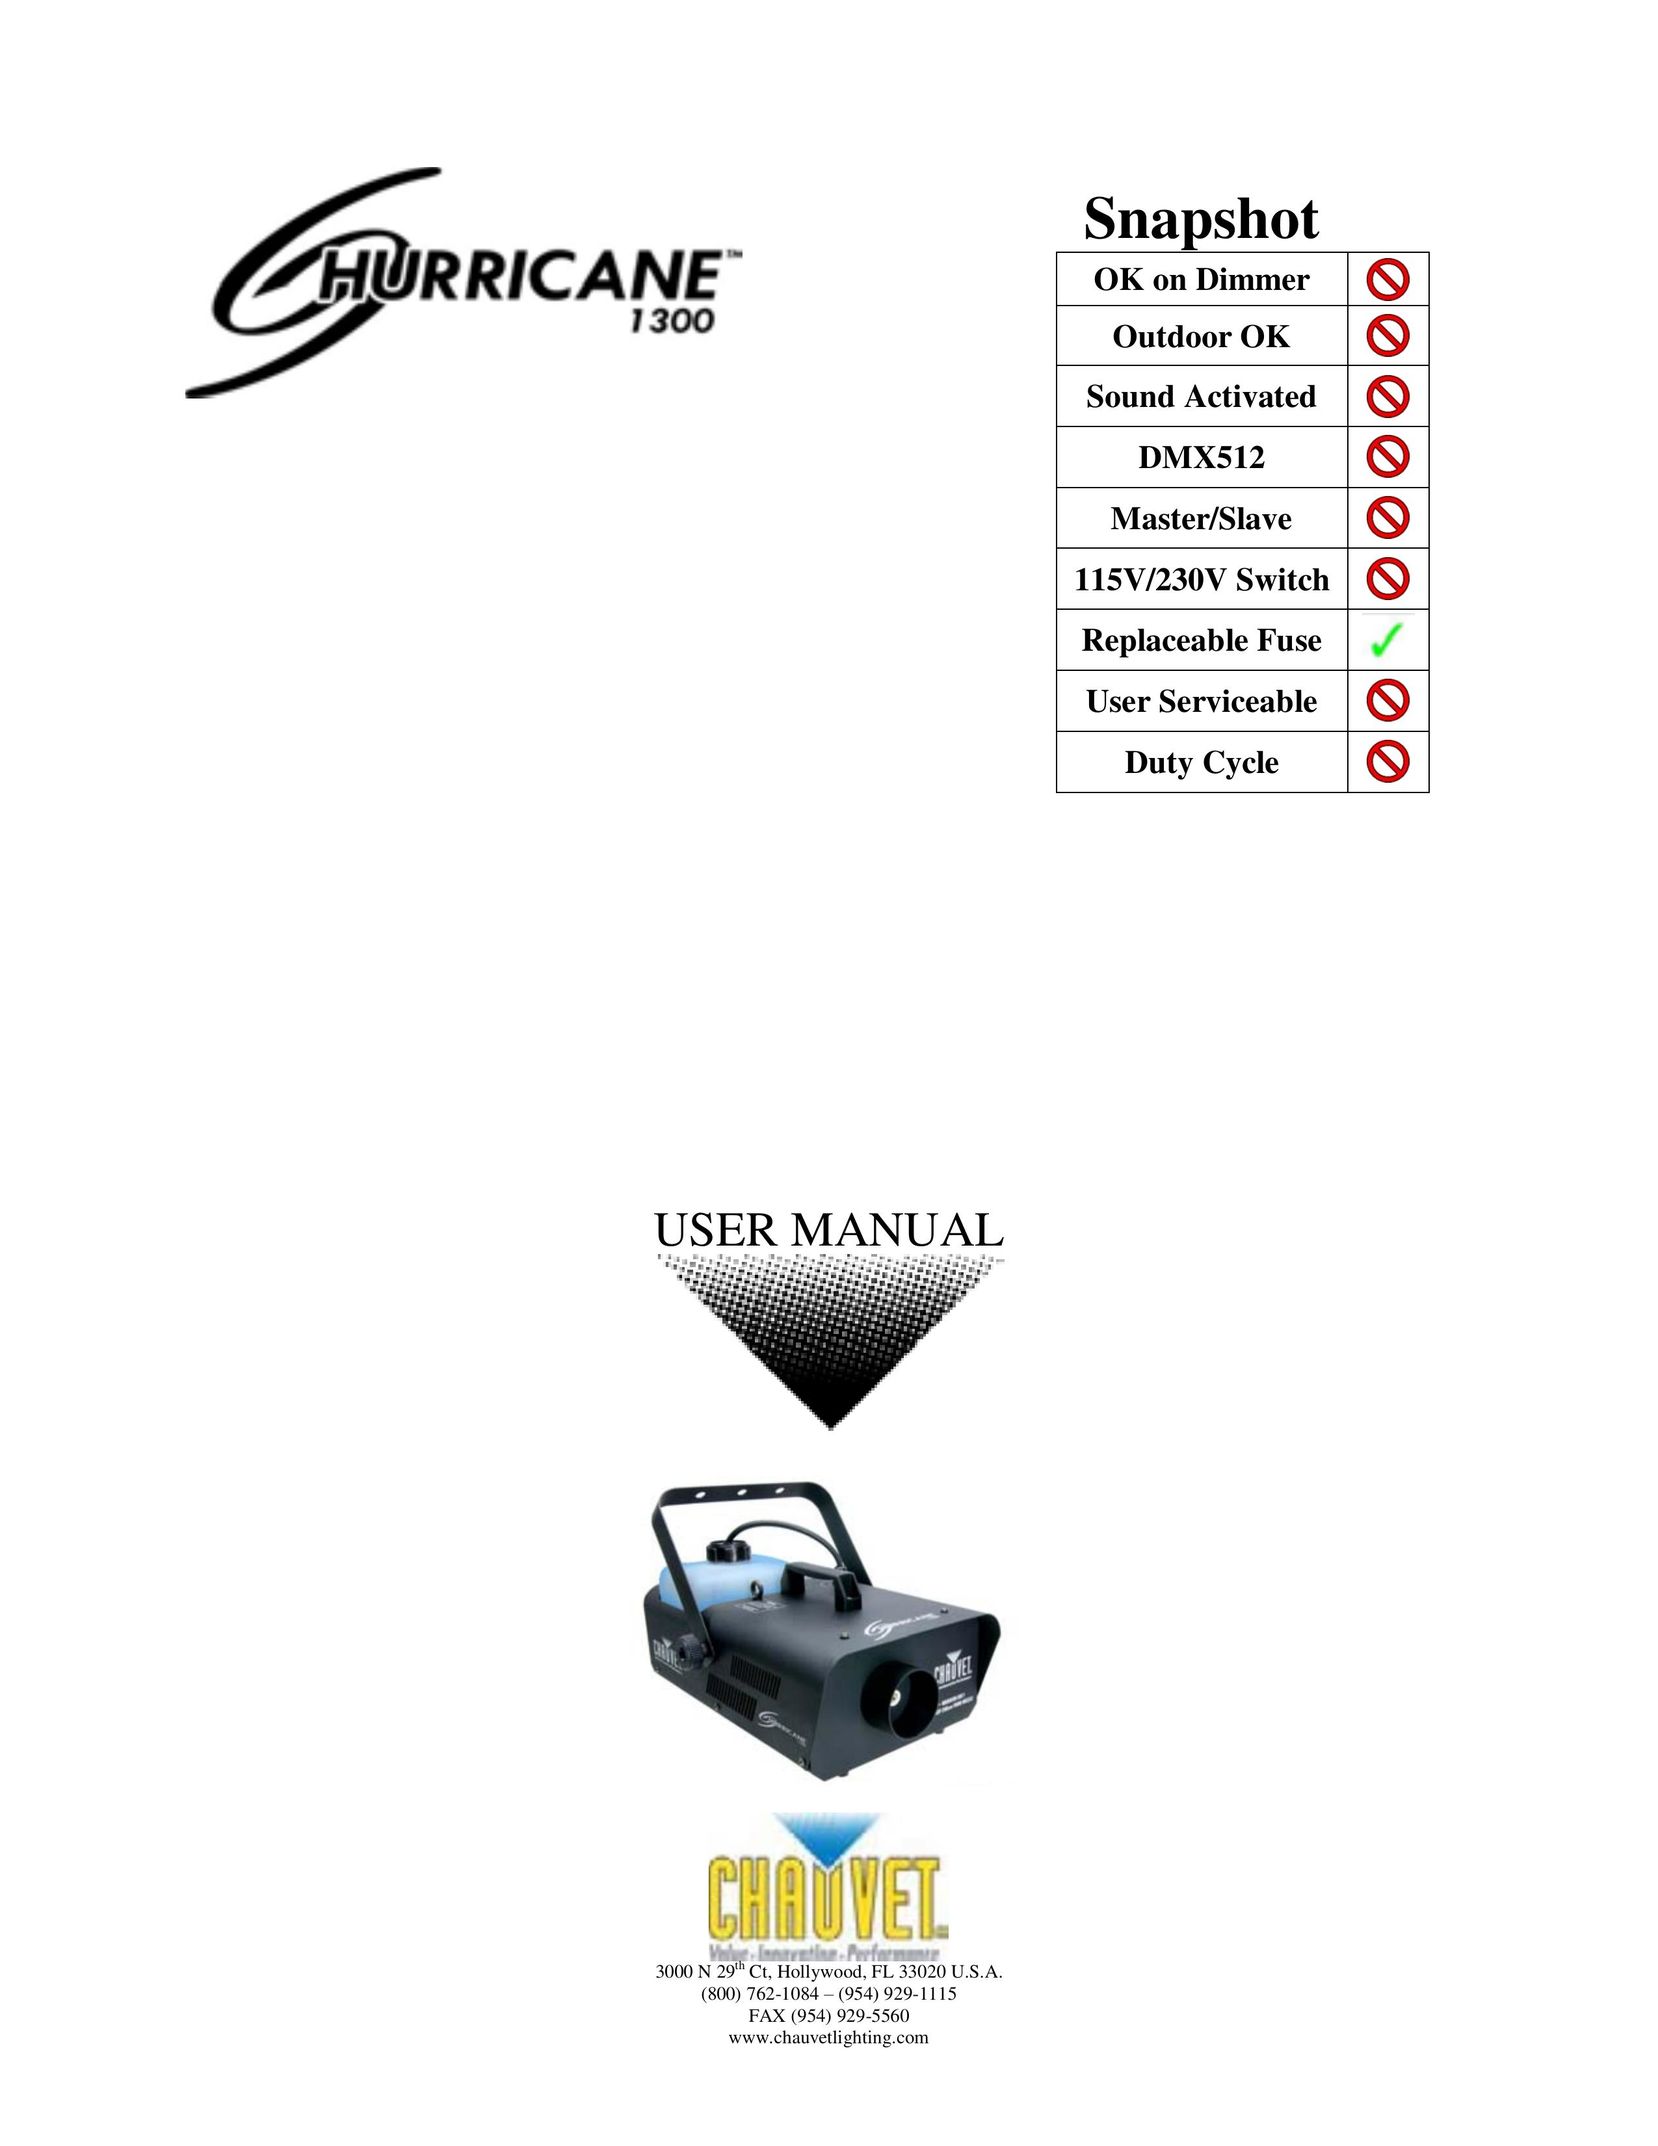 Chauvet Hurricane 1300 CRT Television User Manual